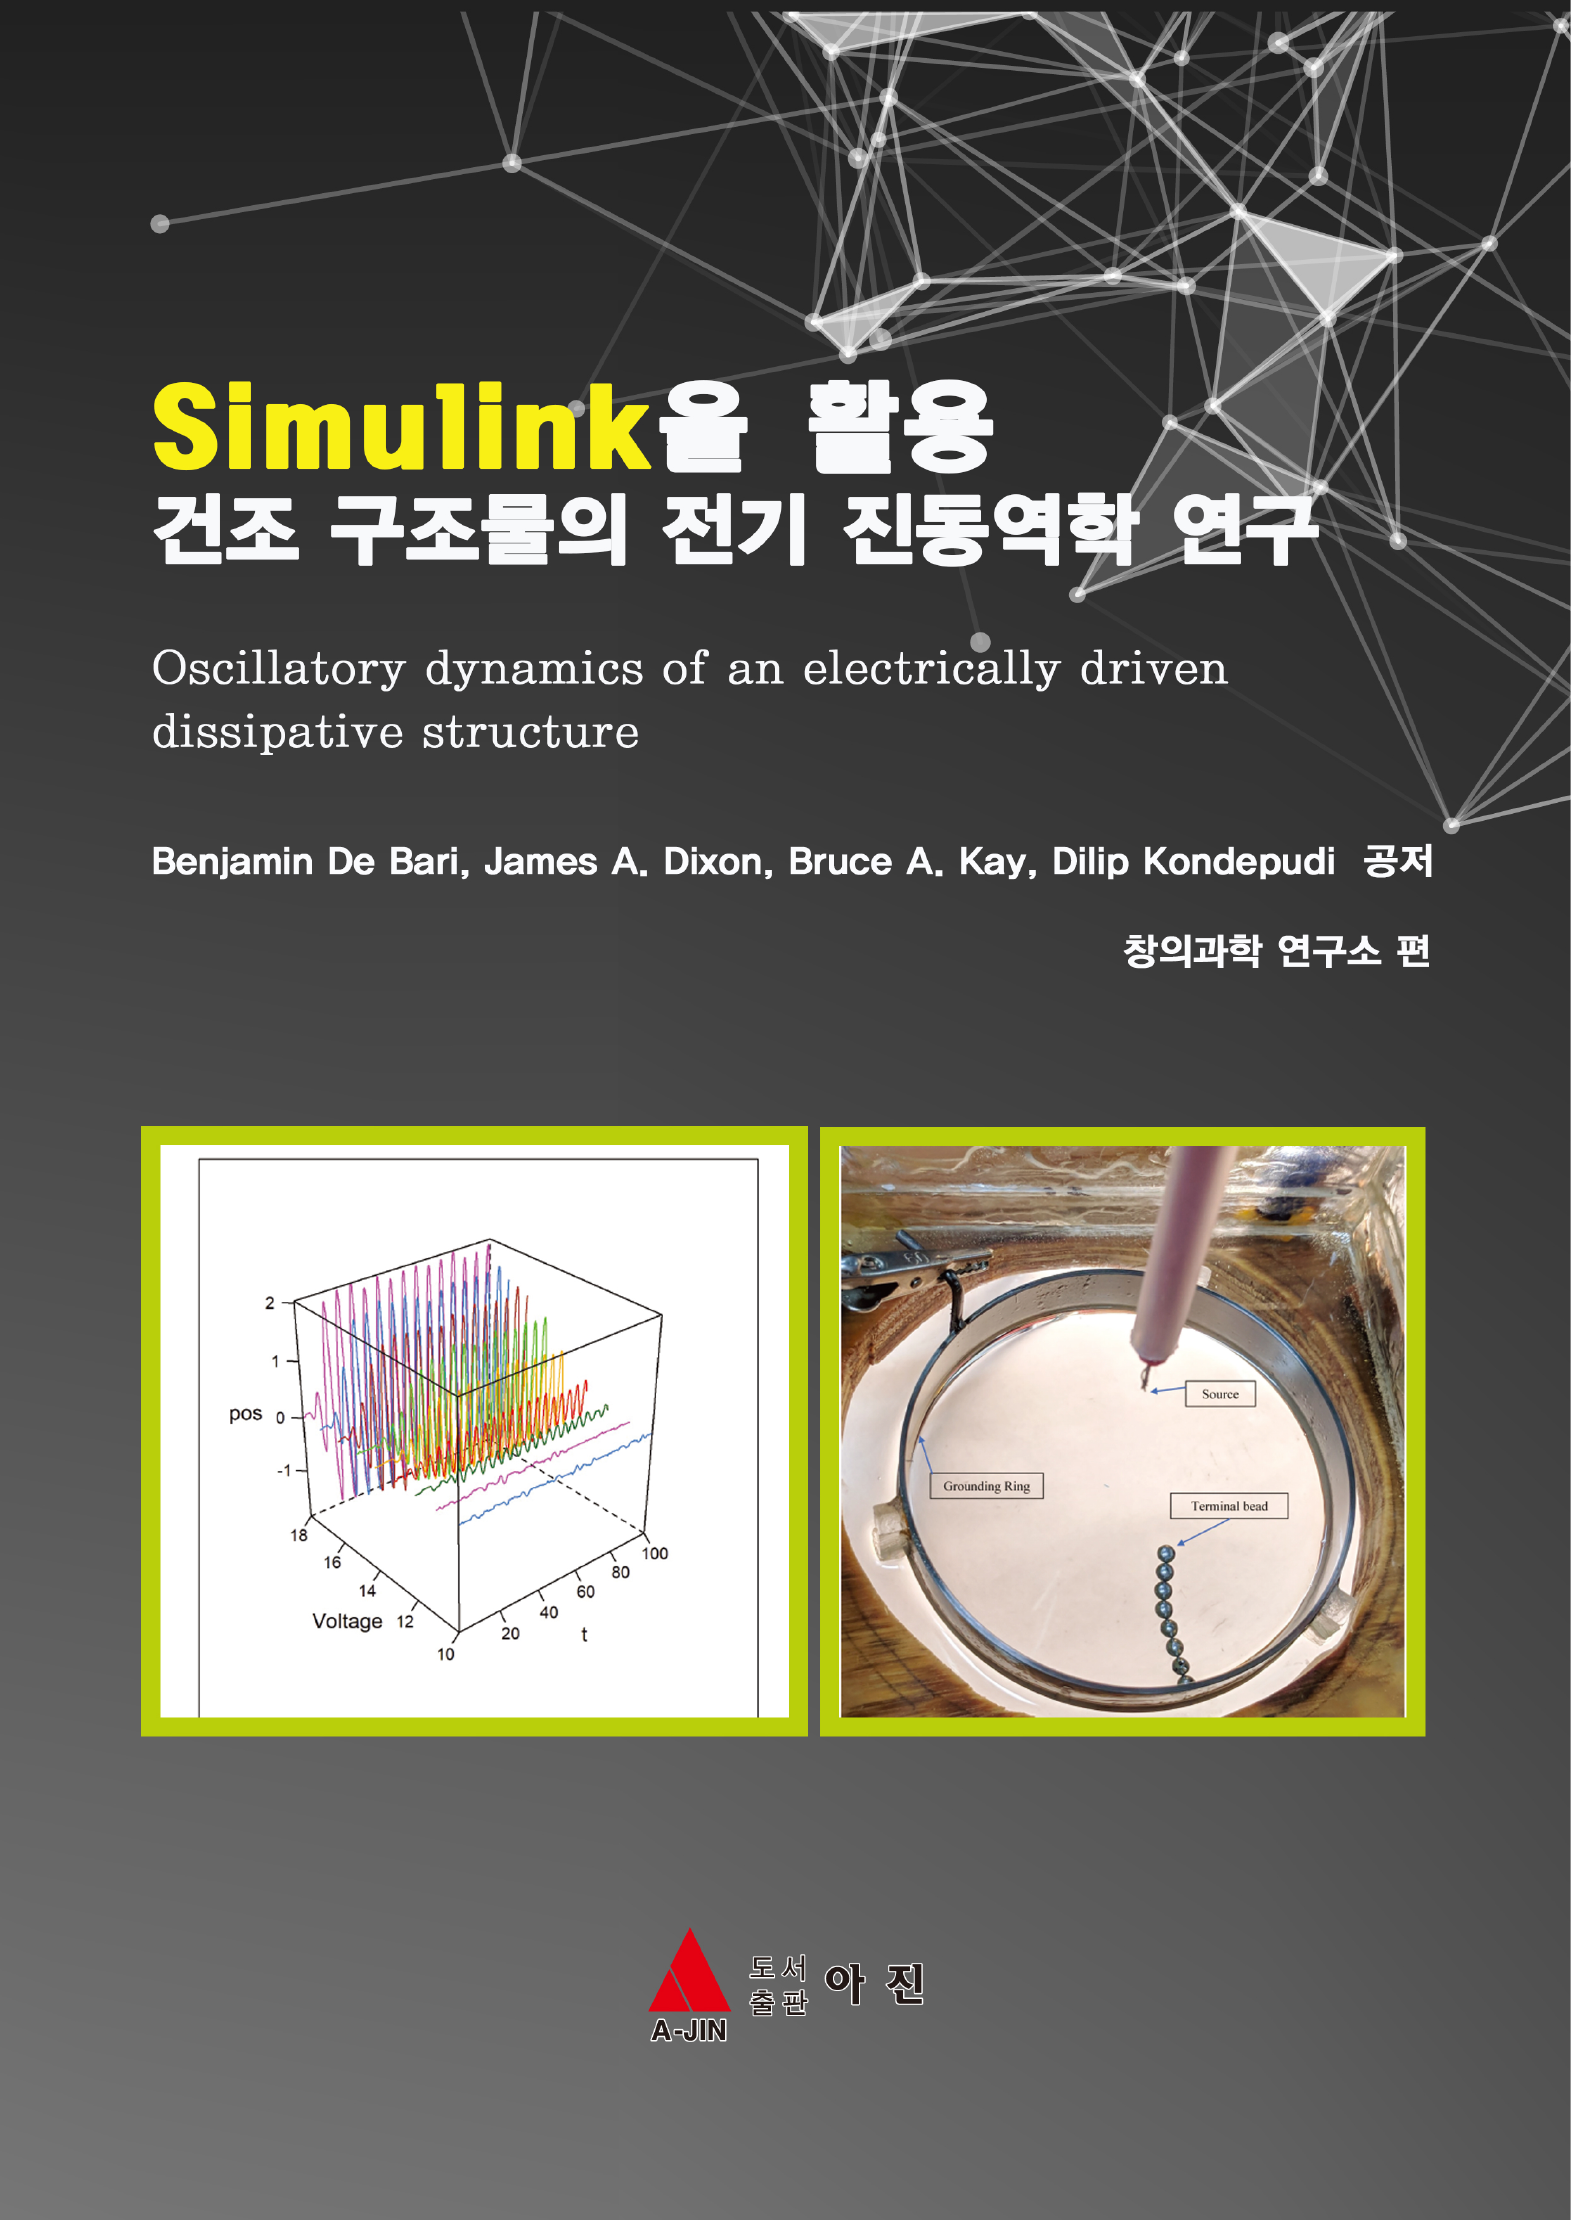 Simulink을 활용 건조 구조물의 전기 진동역학 연구